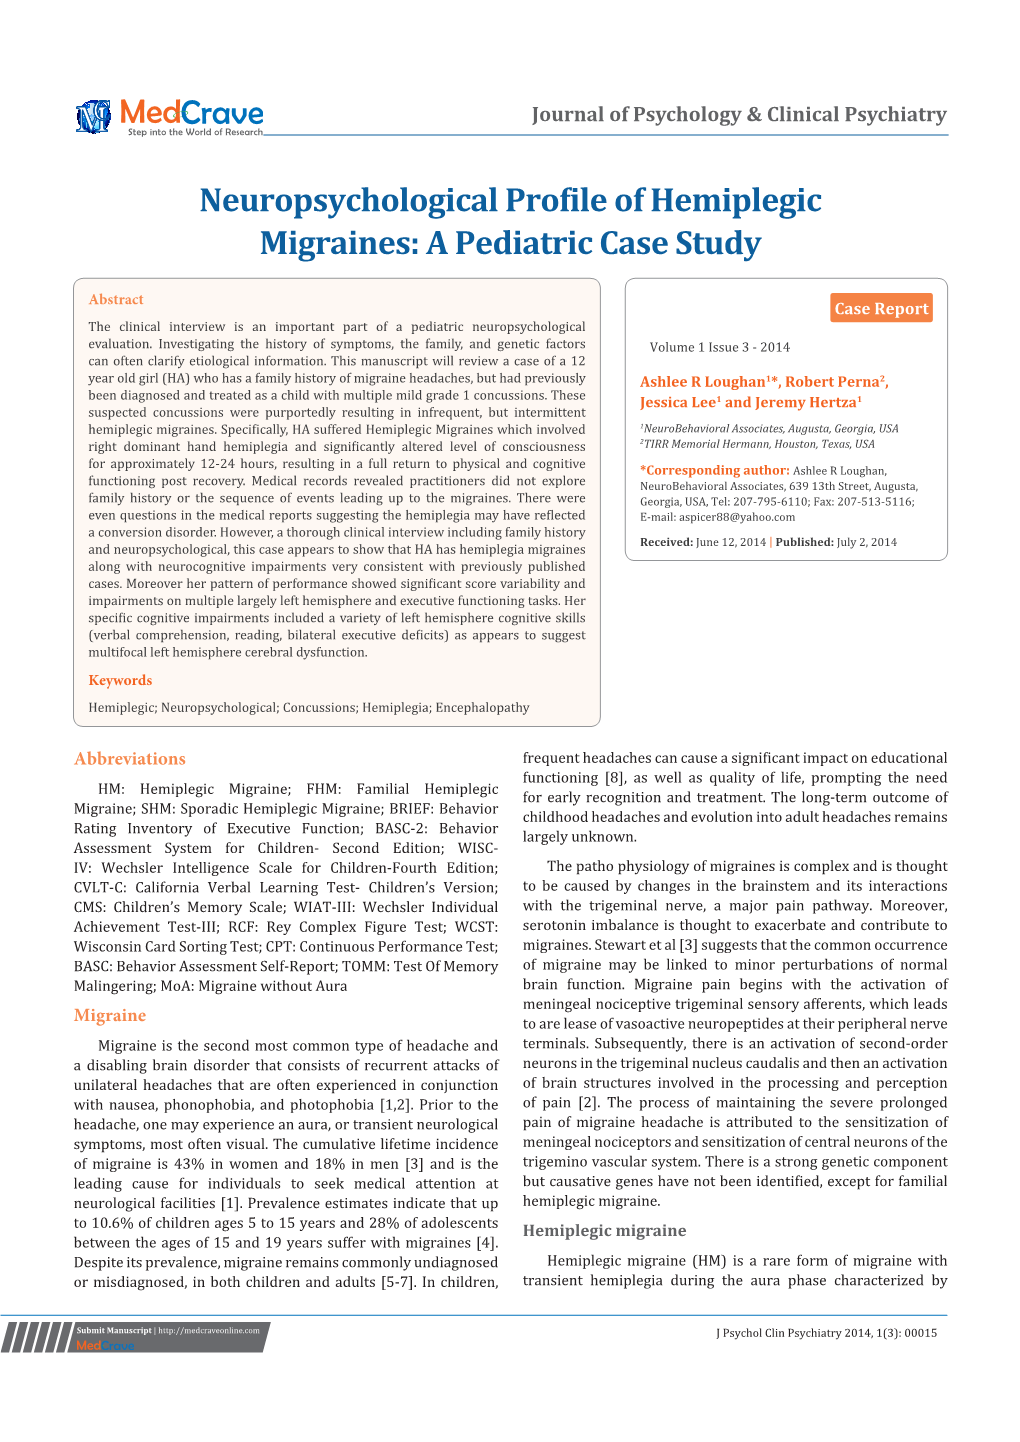 Neuropsychological Profile of Hemiplegic Migraines: a Pediatric Case Study